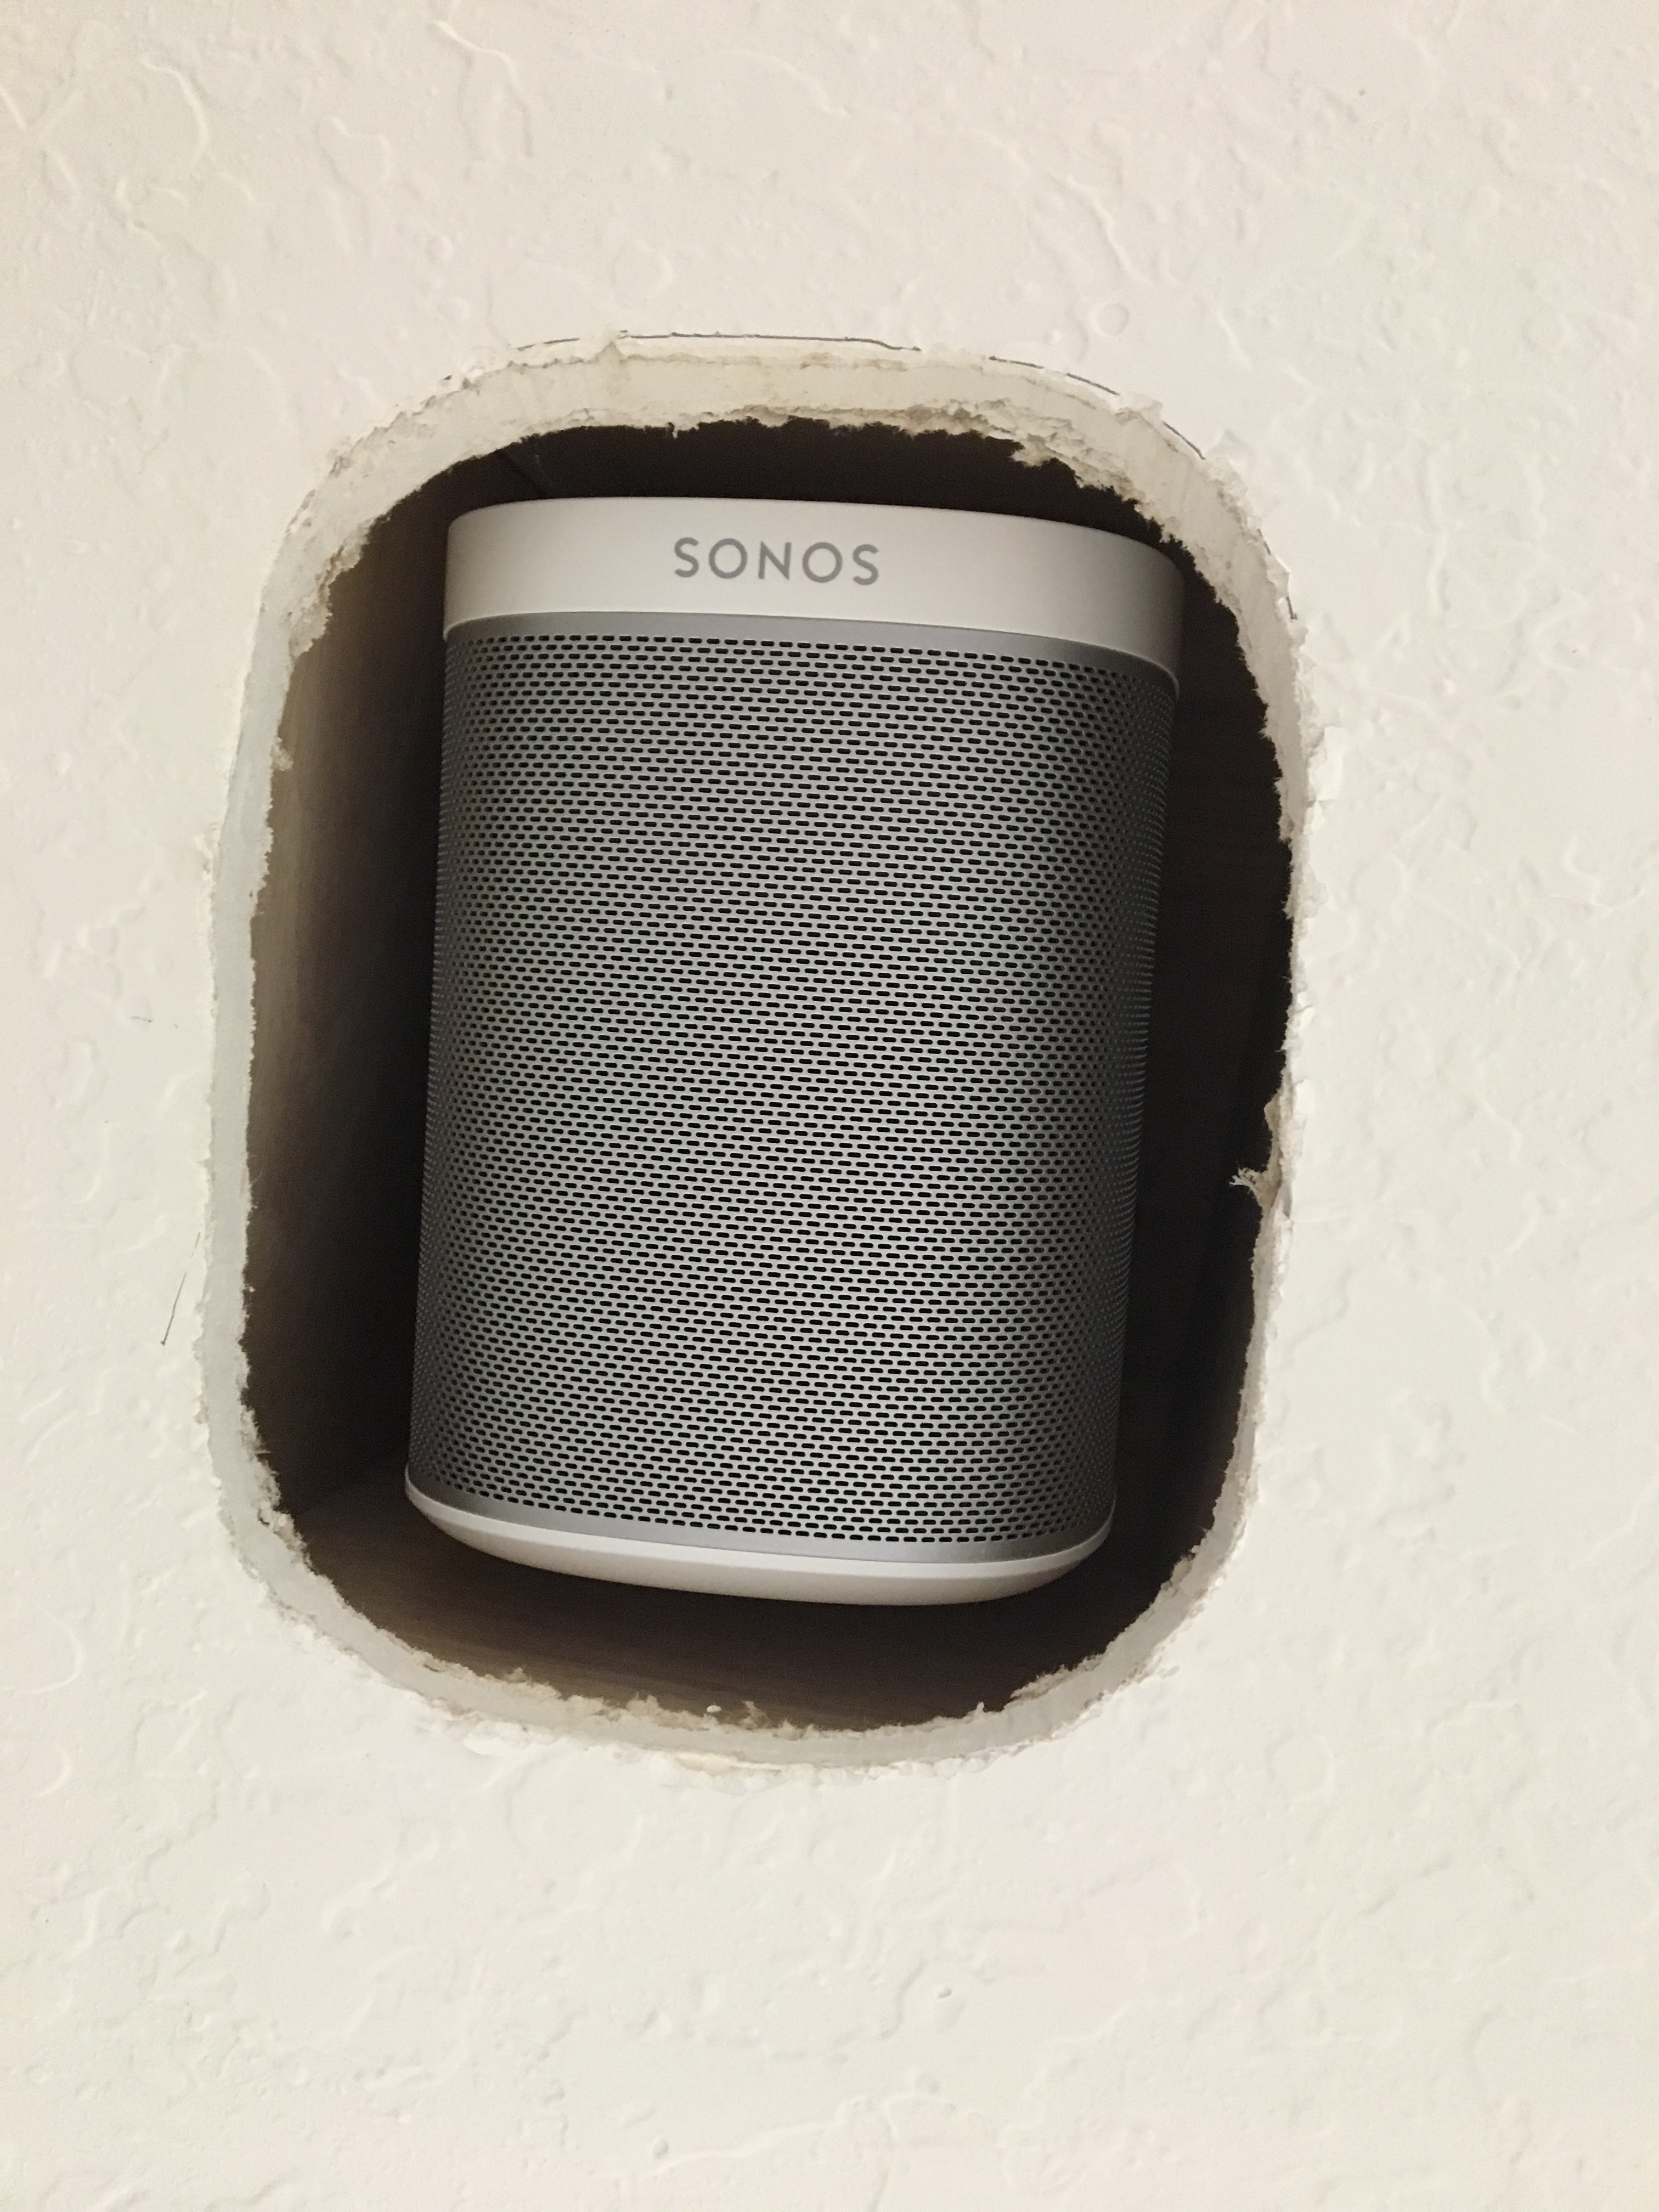 Play 1 Vs Ceiling Mounted Speakers Sonos Community